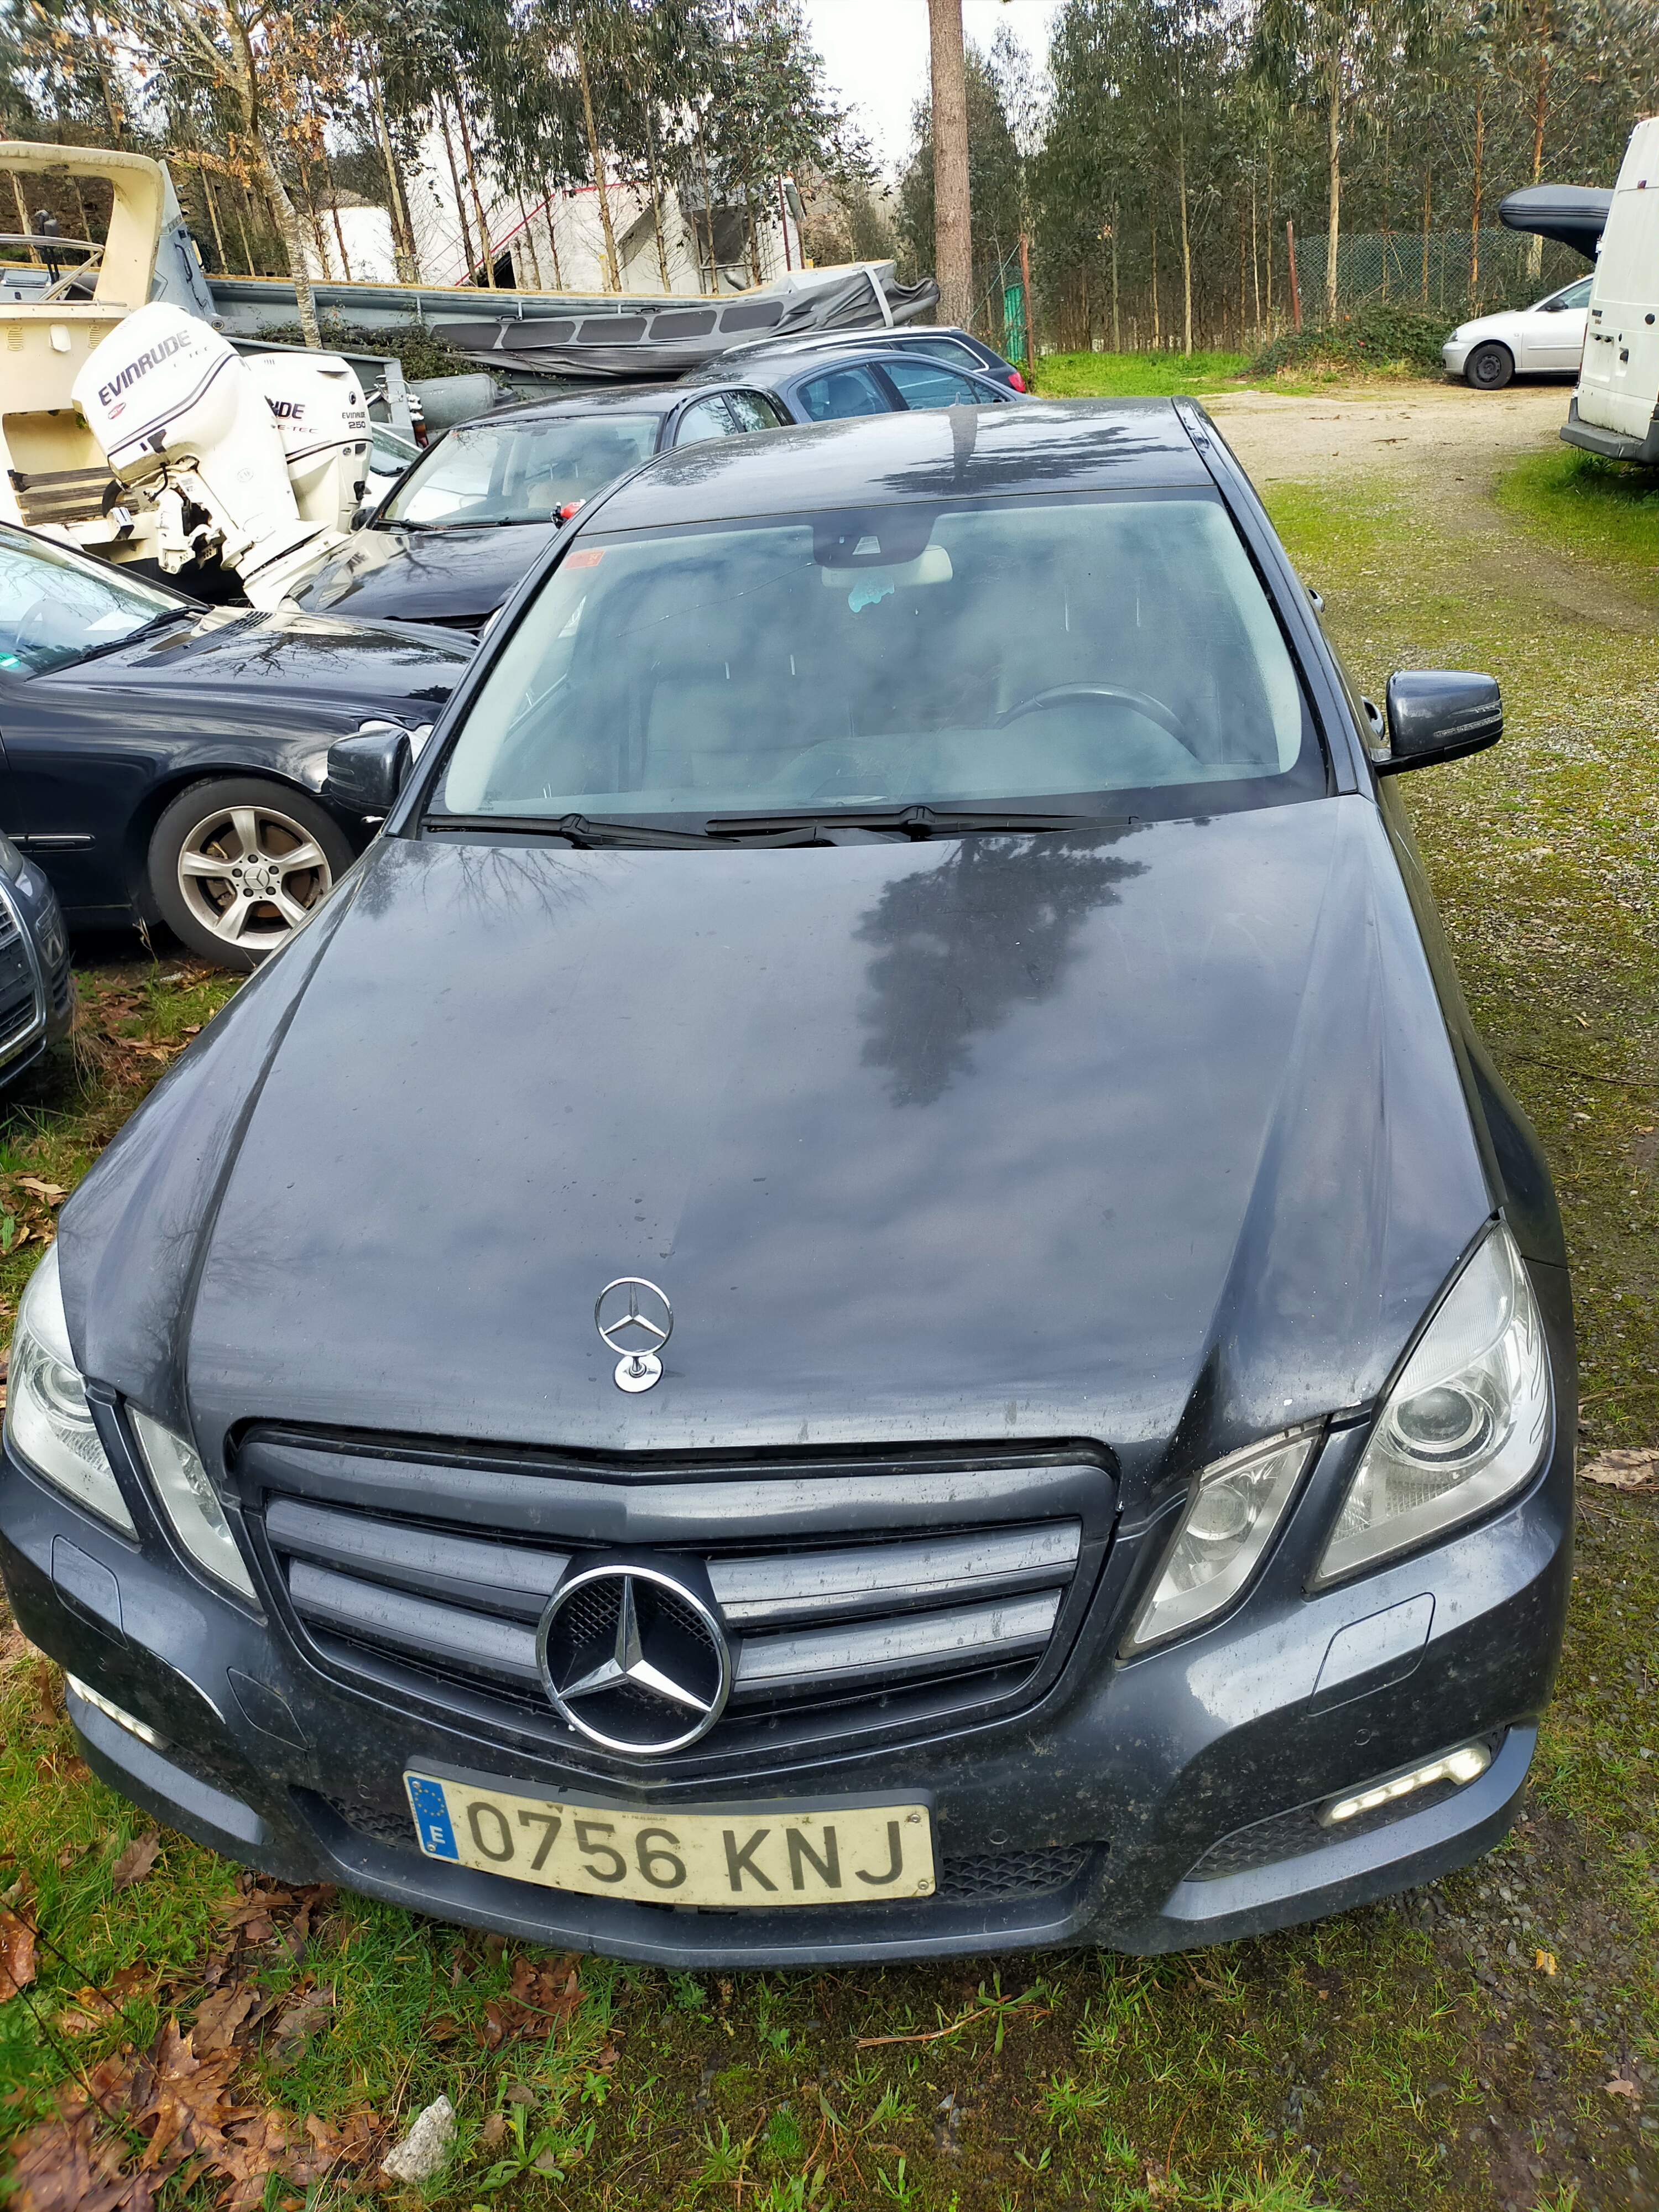 Mercedes Benz E350 CDI. Matrícula 0756KNJ